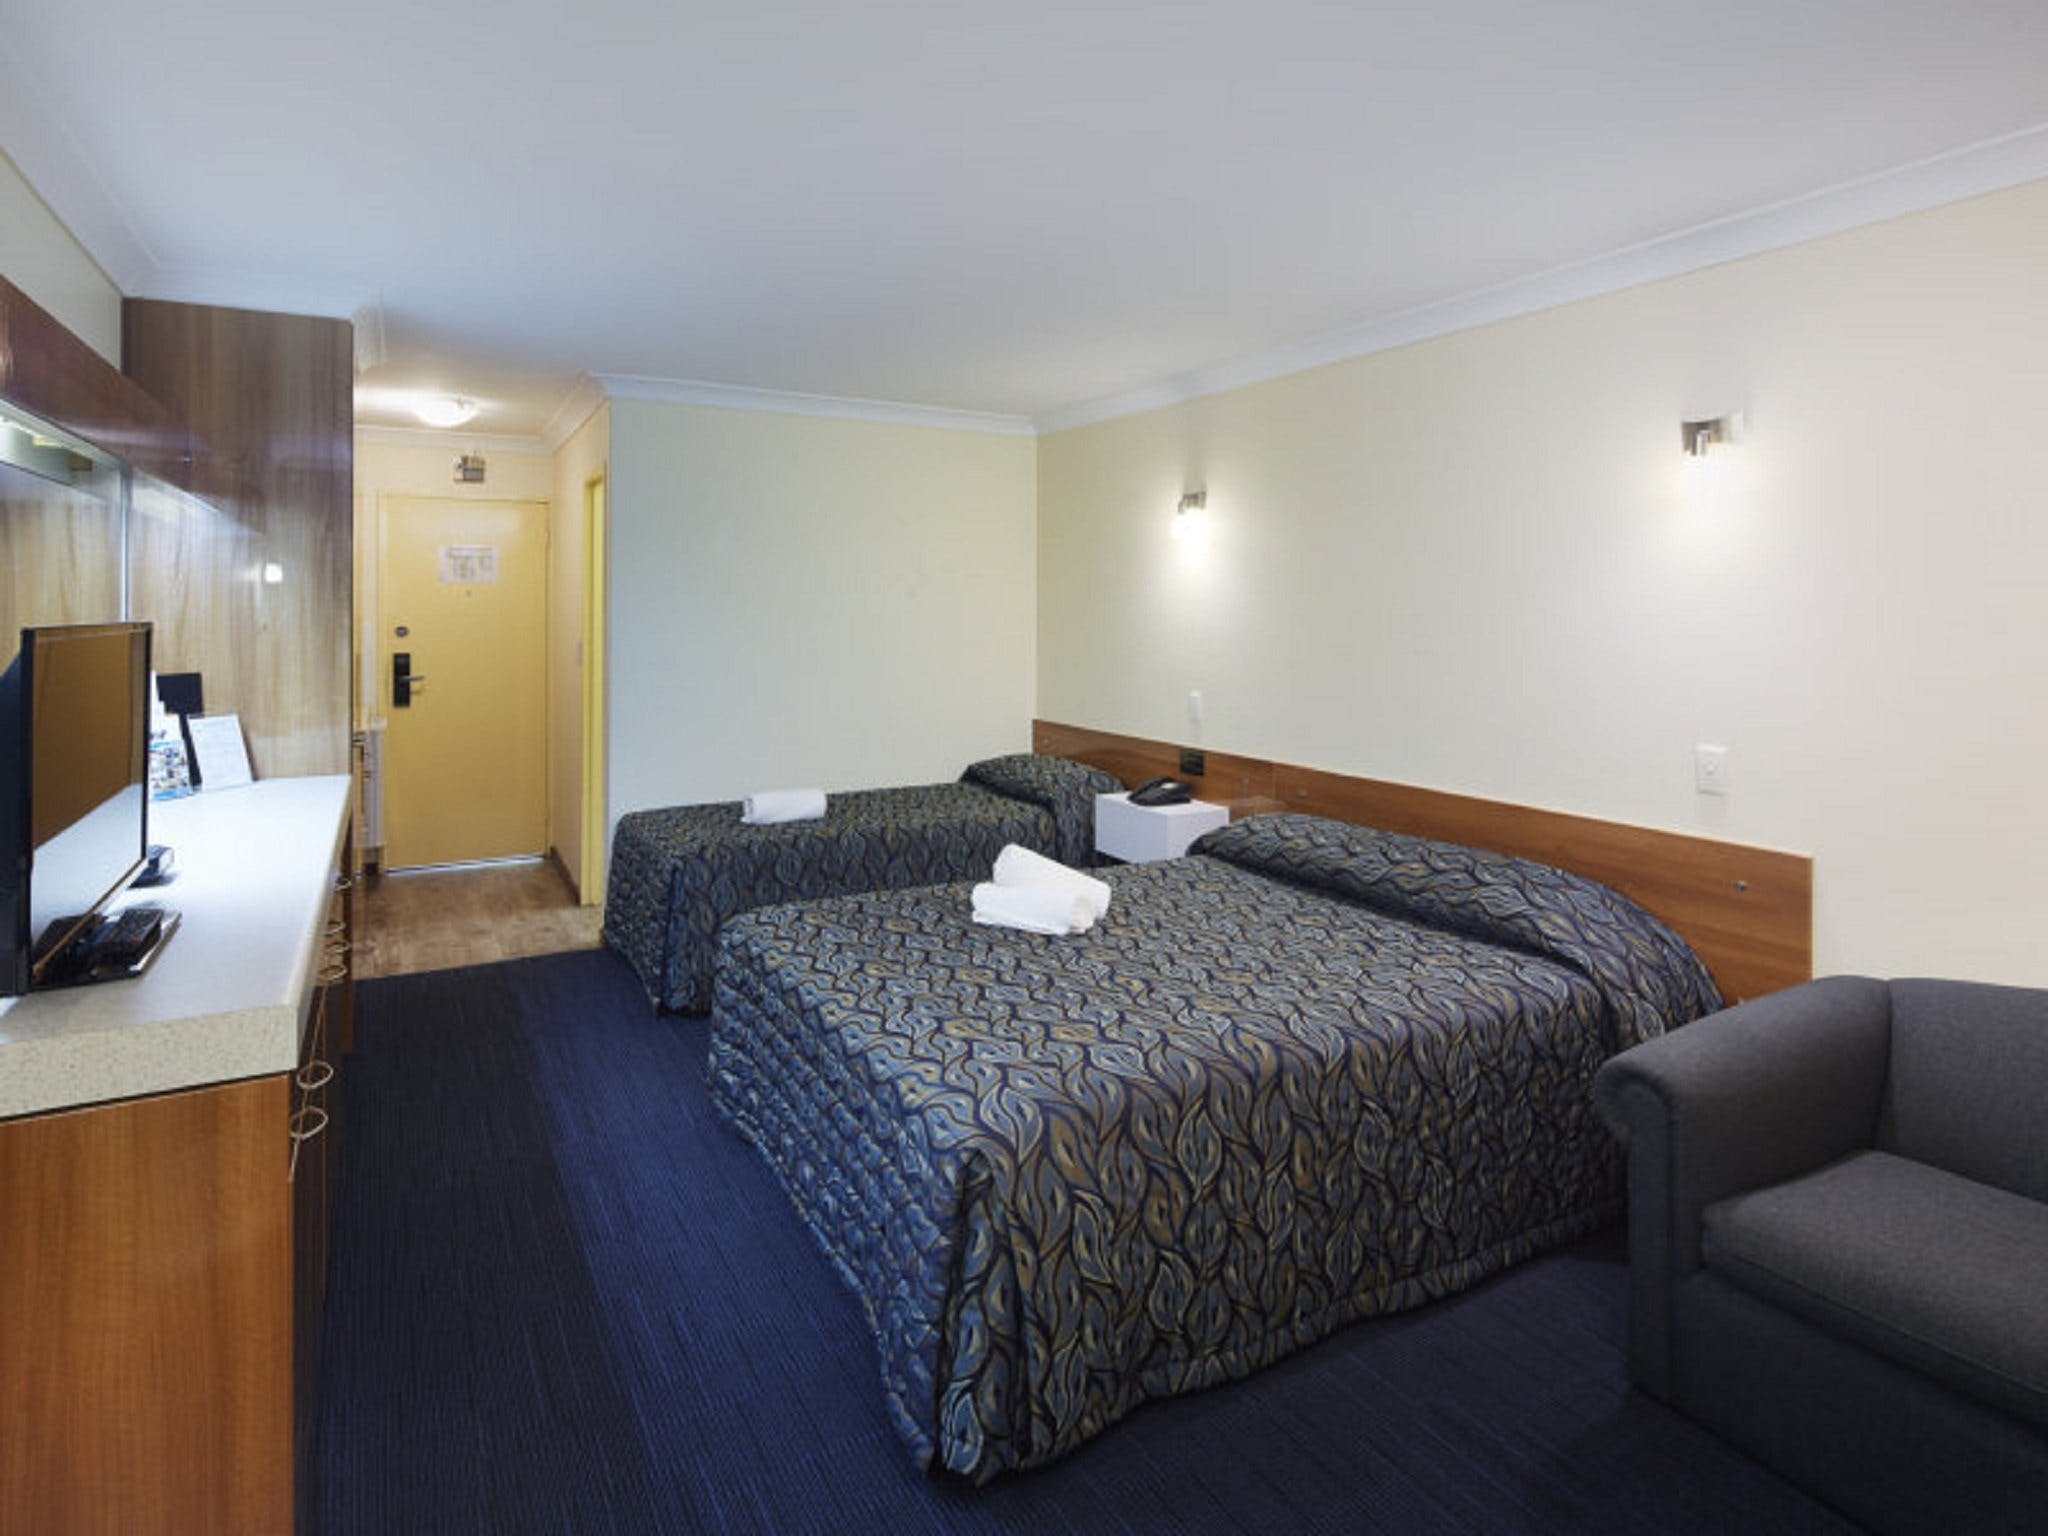 Windsor Lodge Como - Accommodation Resorts